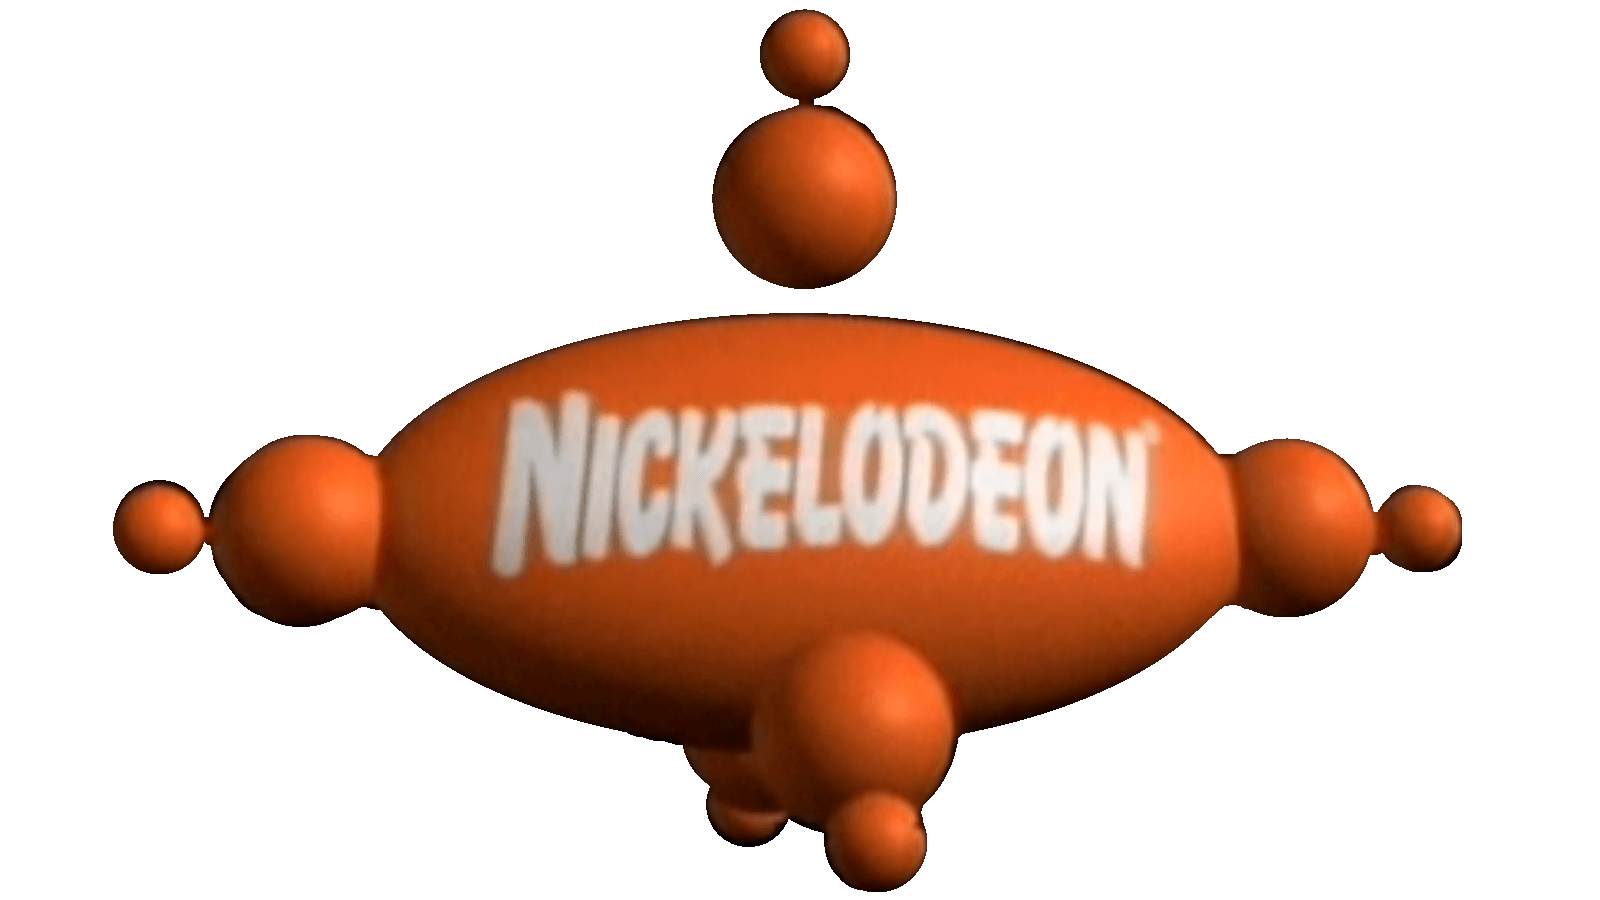 Nickelodeon Balloon Logo - Image - Nickelodeon Balloon.png | Logopedia | FANDOM powered by Wikia